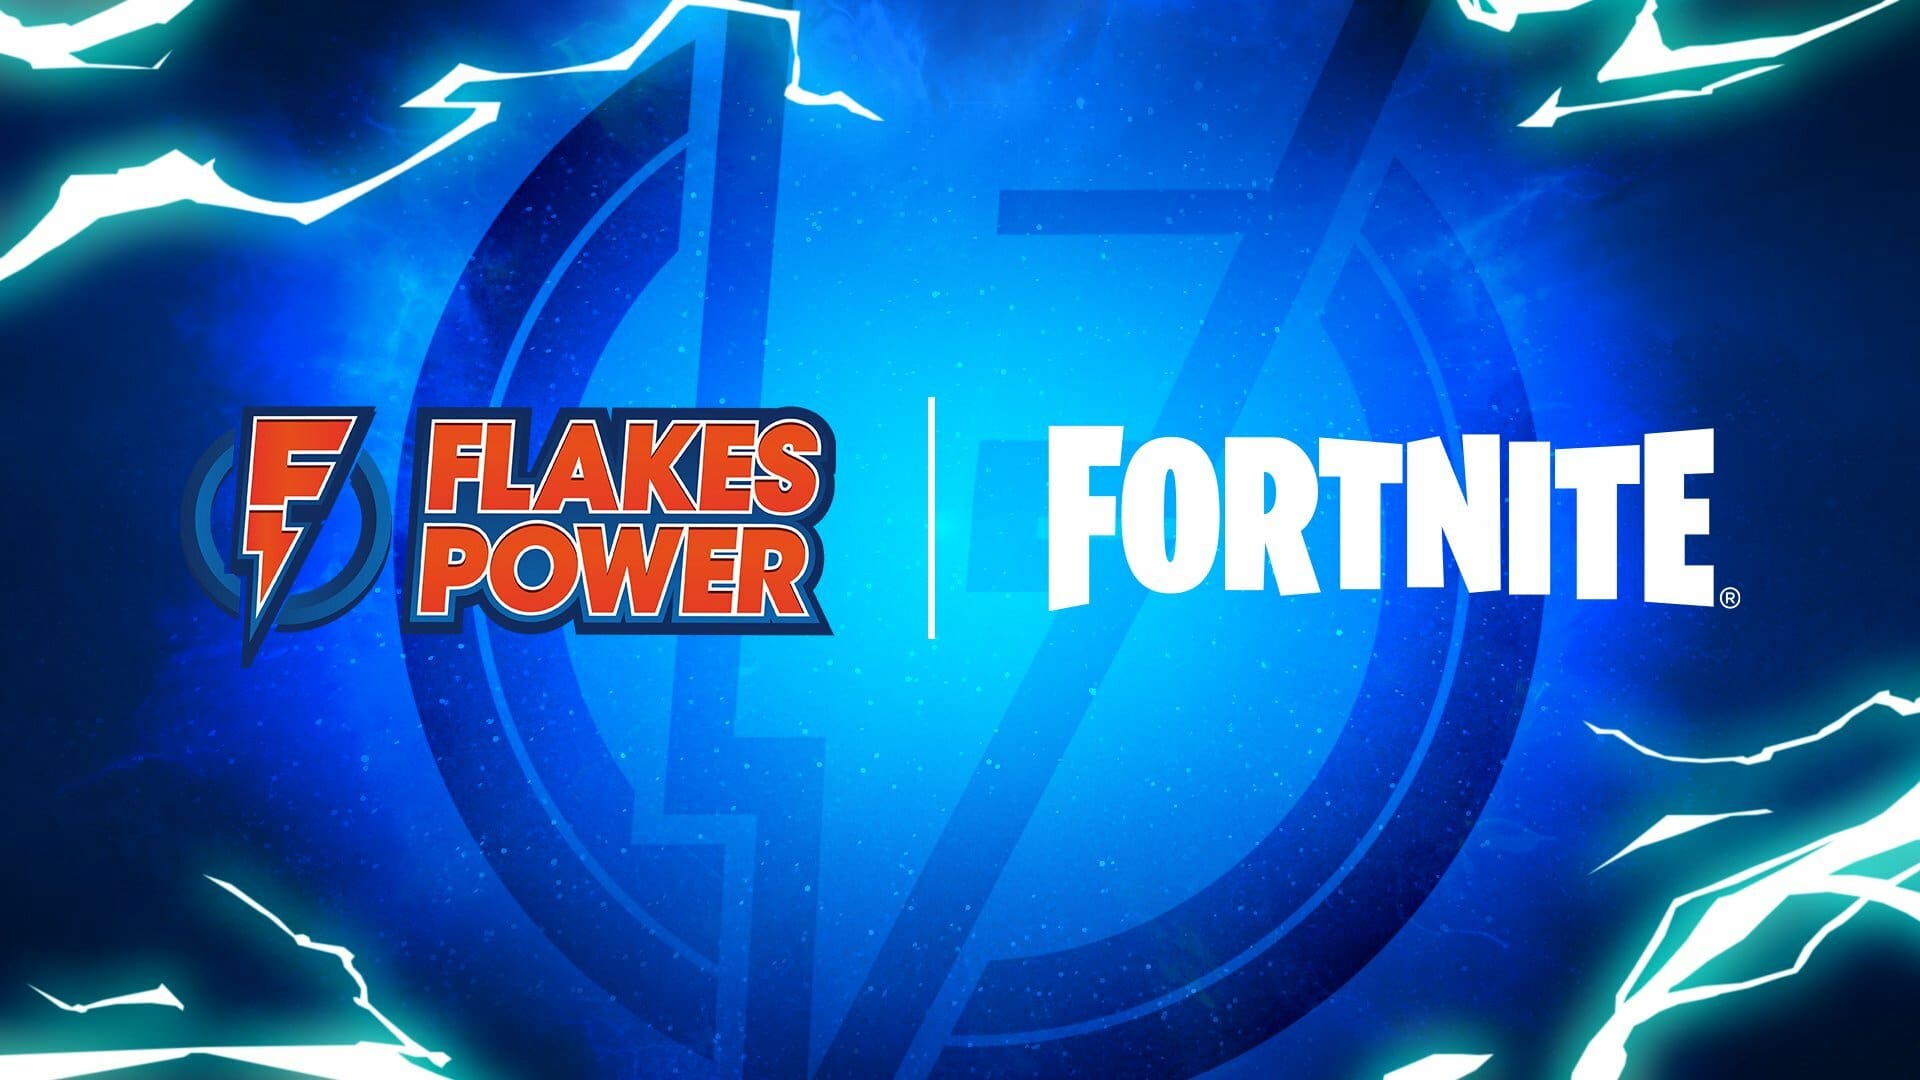 Fortnite X Flakes Power